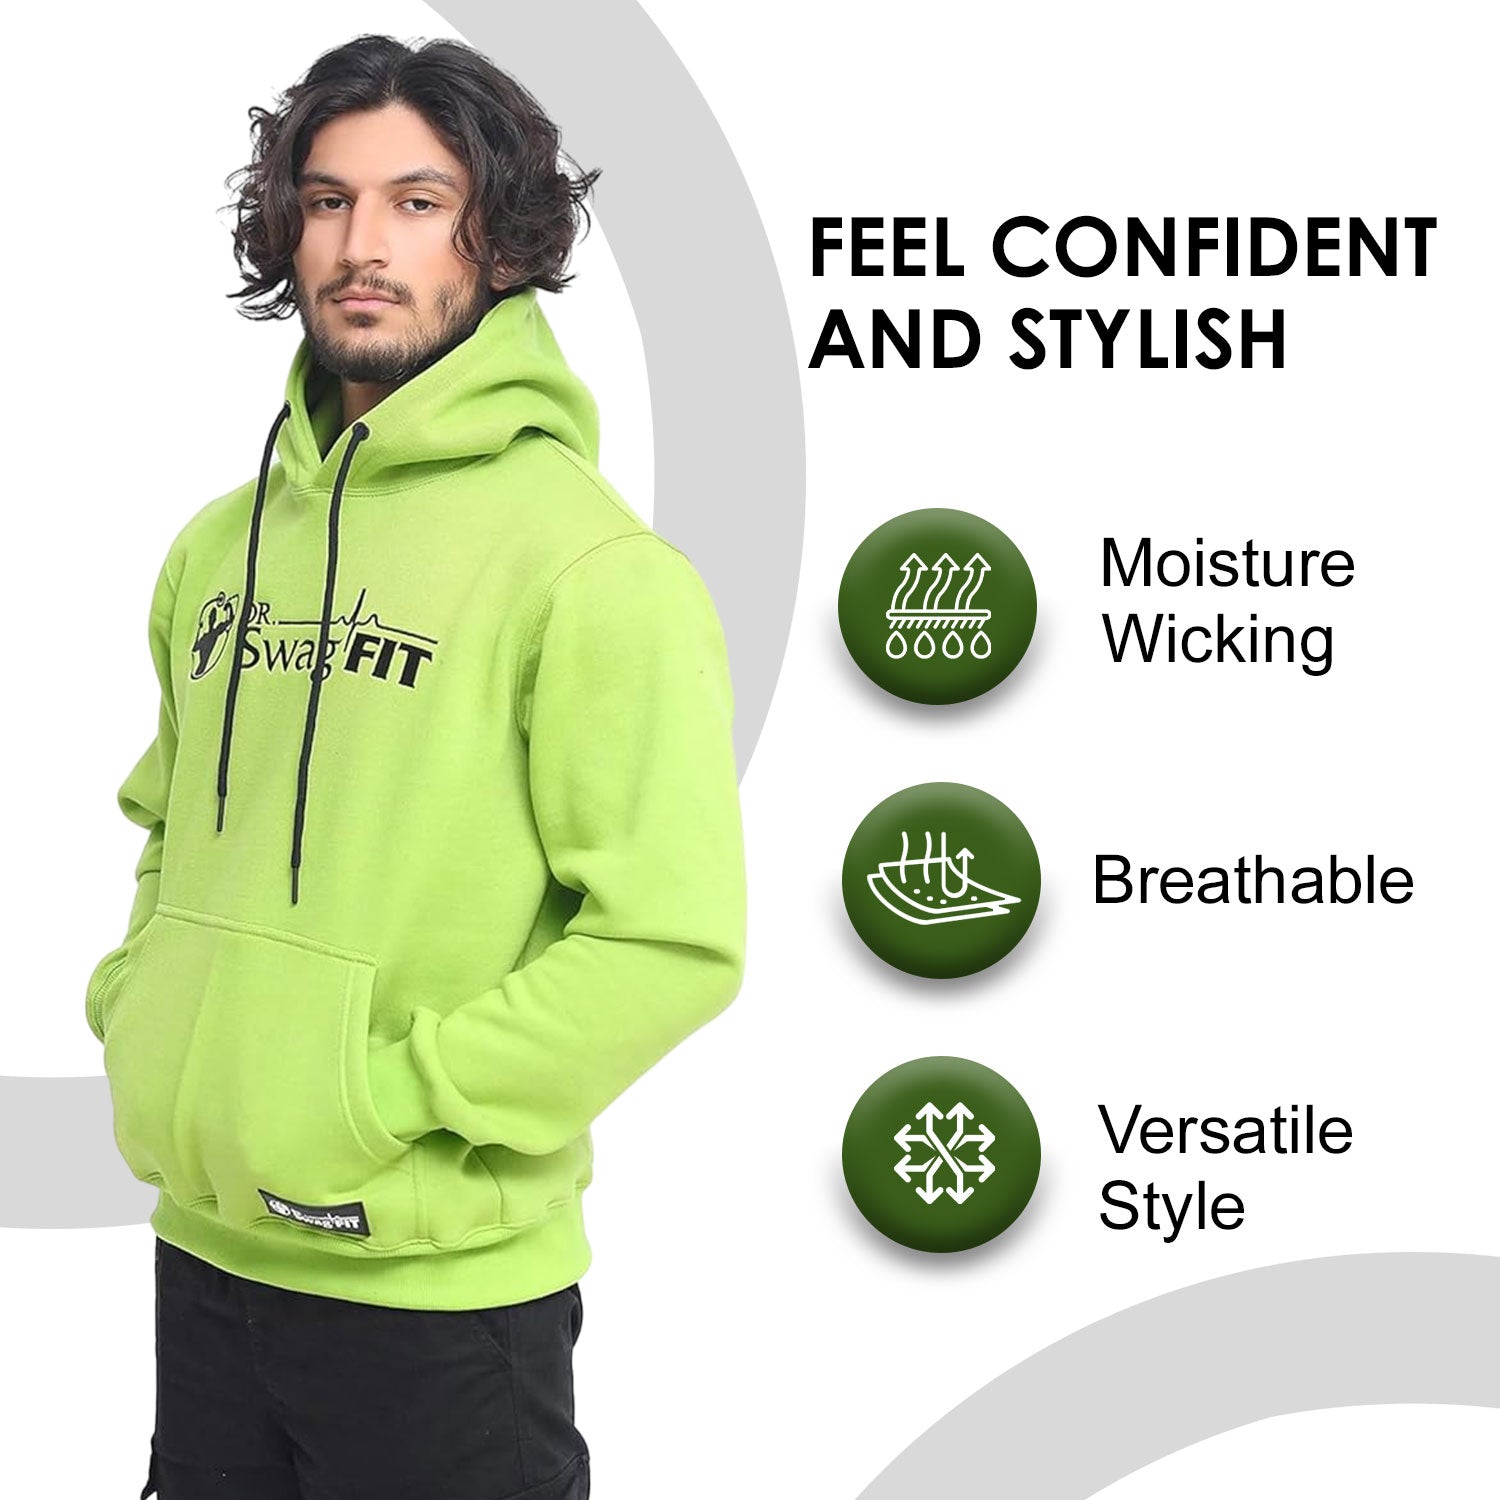 Dr. SwagFit Unisex Adult Classic Green Hoodie, Fleece Hoodie Jacket for Men and Women, Casual, Warm, Hooded Sweatshirt Pullover